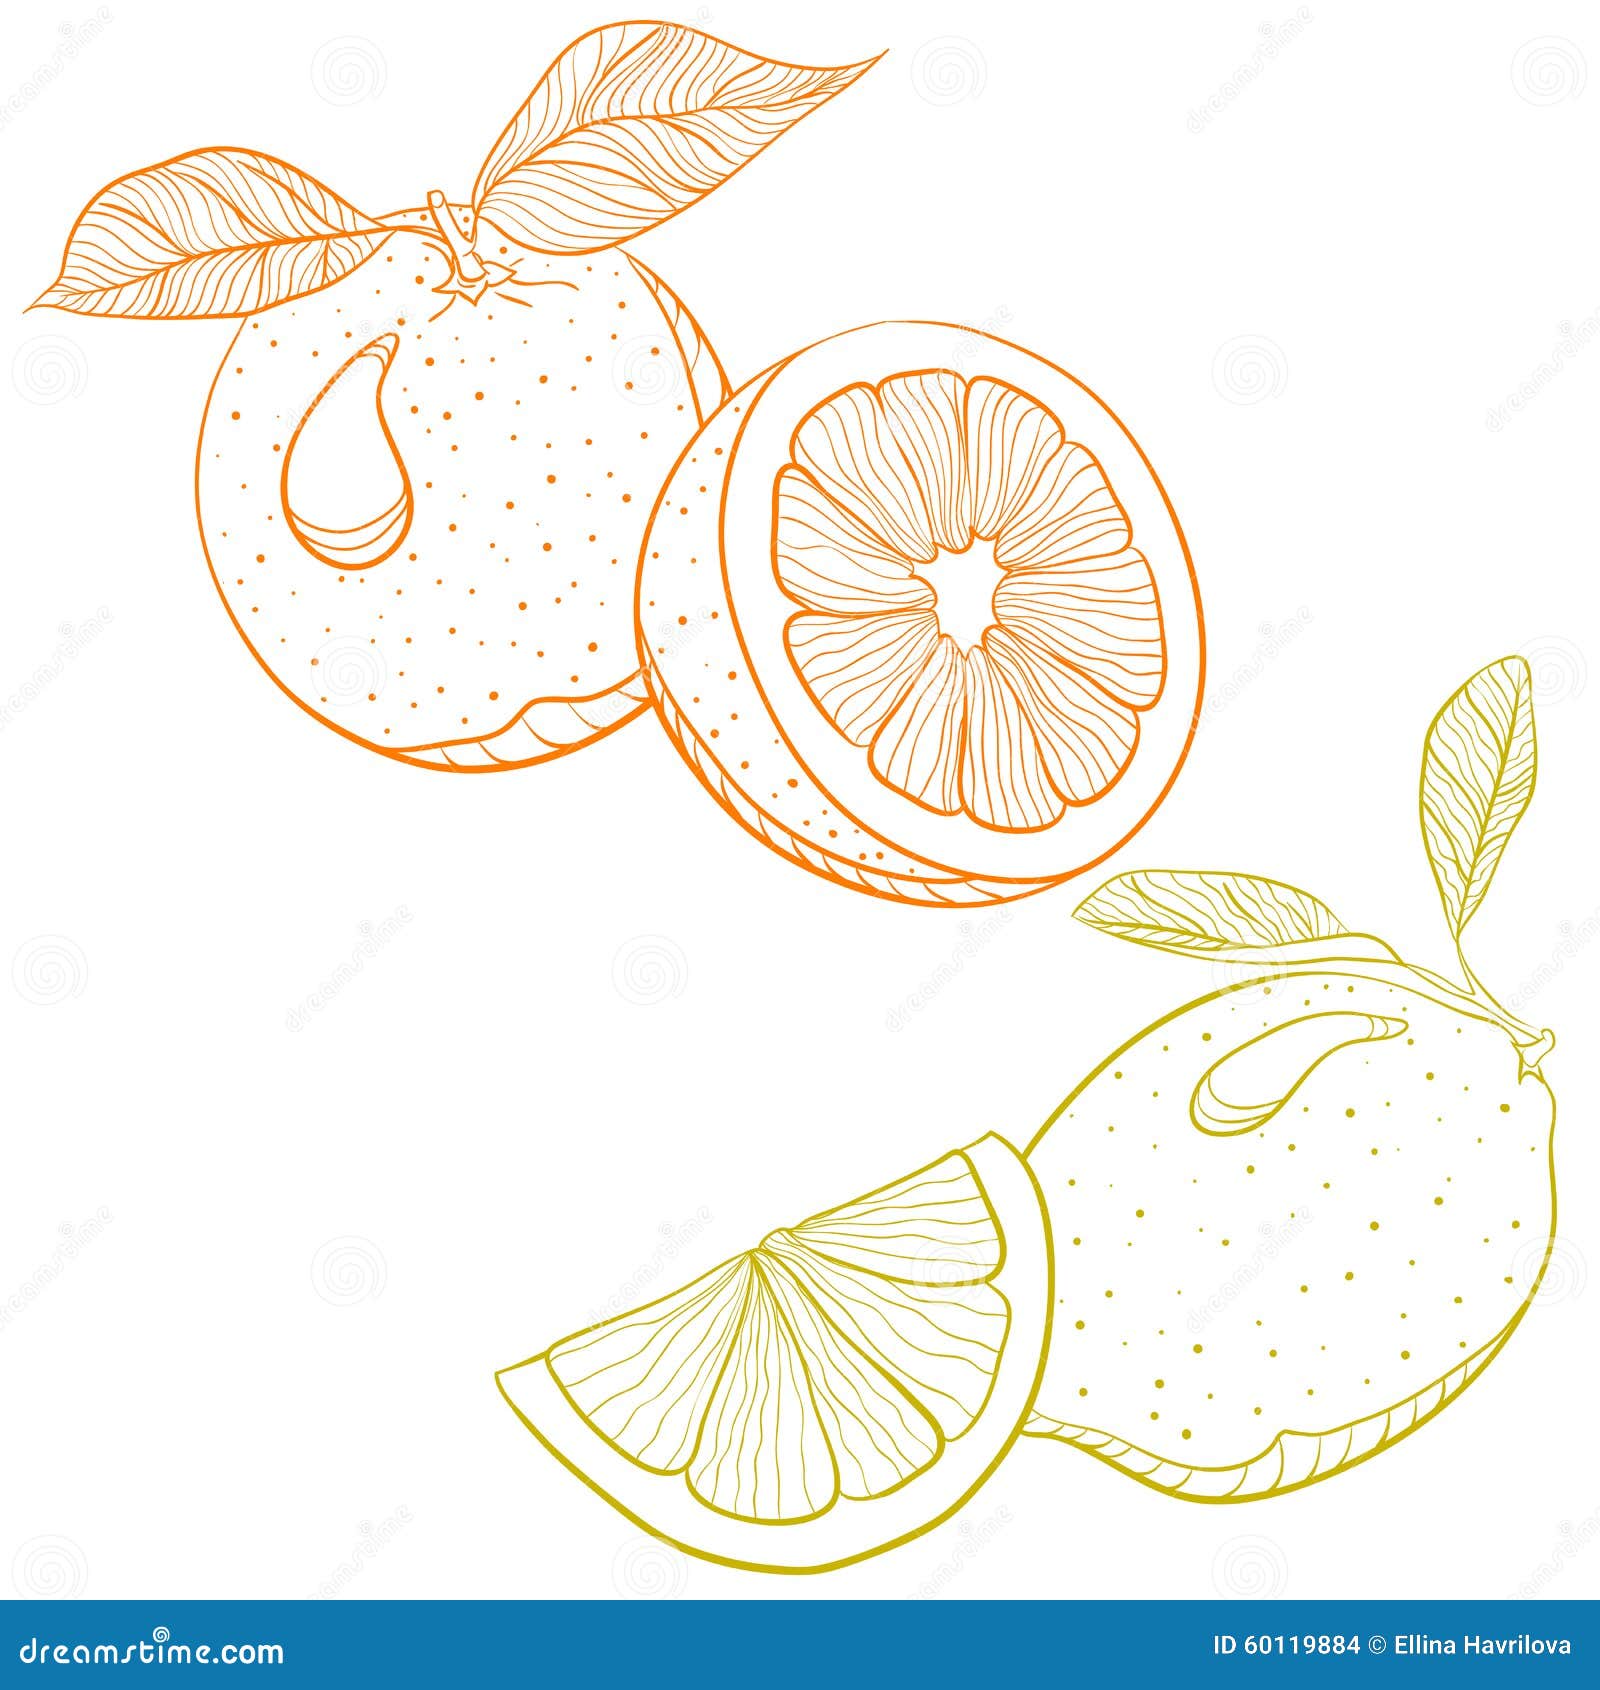  drawing of citrus fruits - orange and lemon